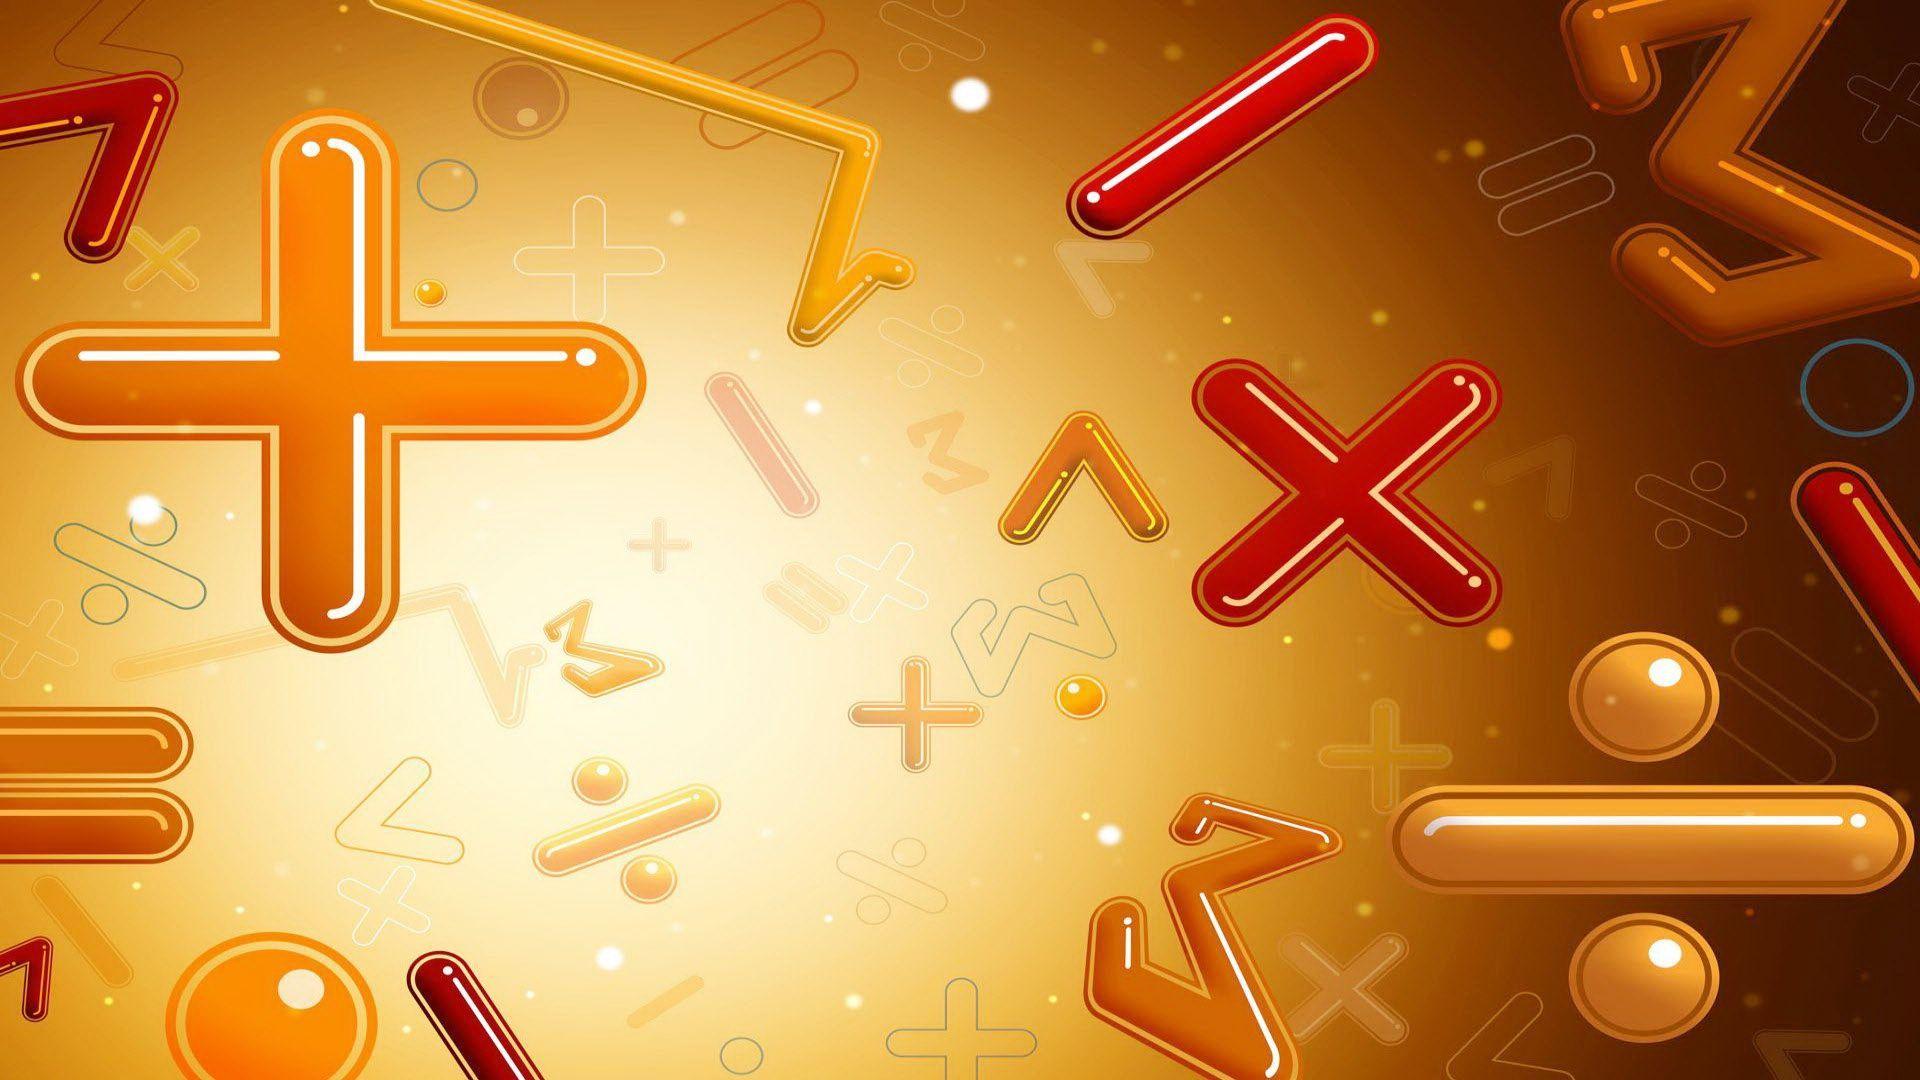 Maths Games Wallpapers - Top Free Maths Games Backgrounds - WallpaperAccess